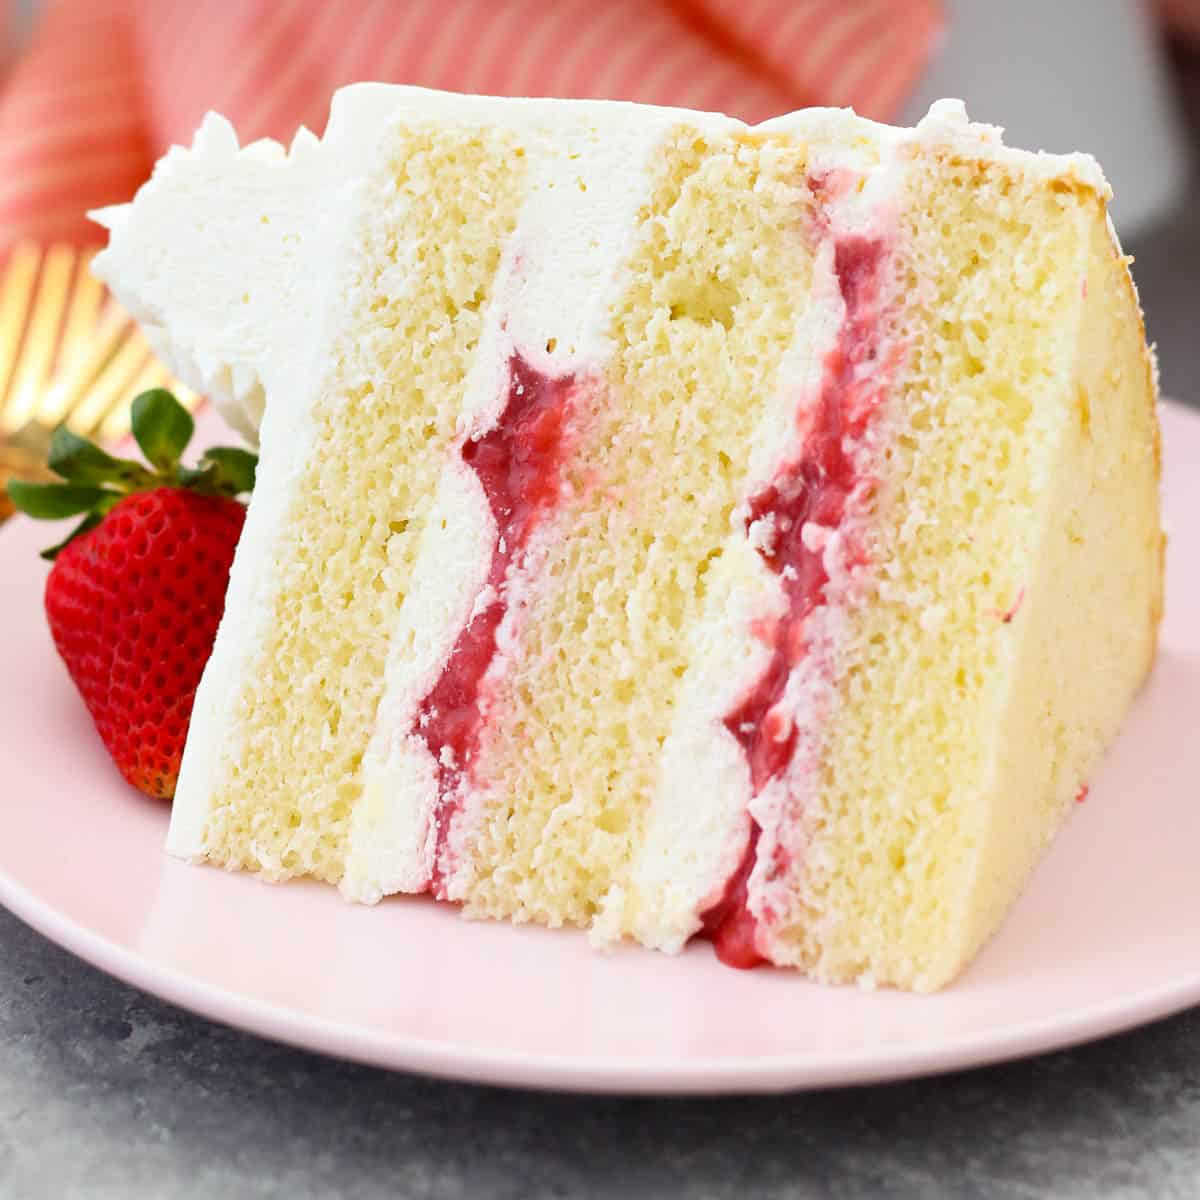 Strawberry and Vanilla Bean Cake — hint of vanilla